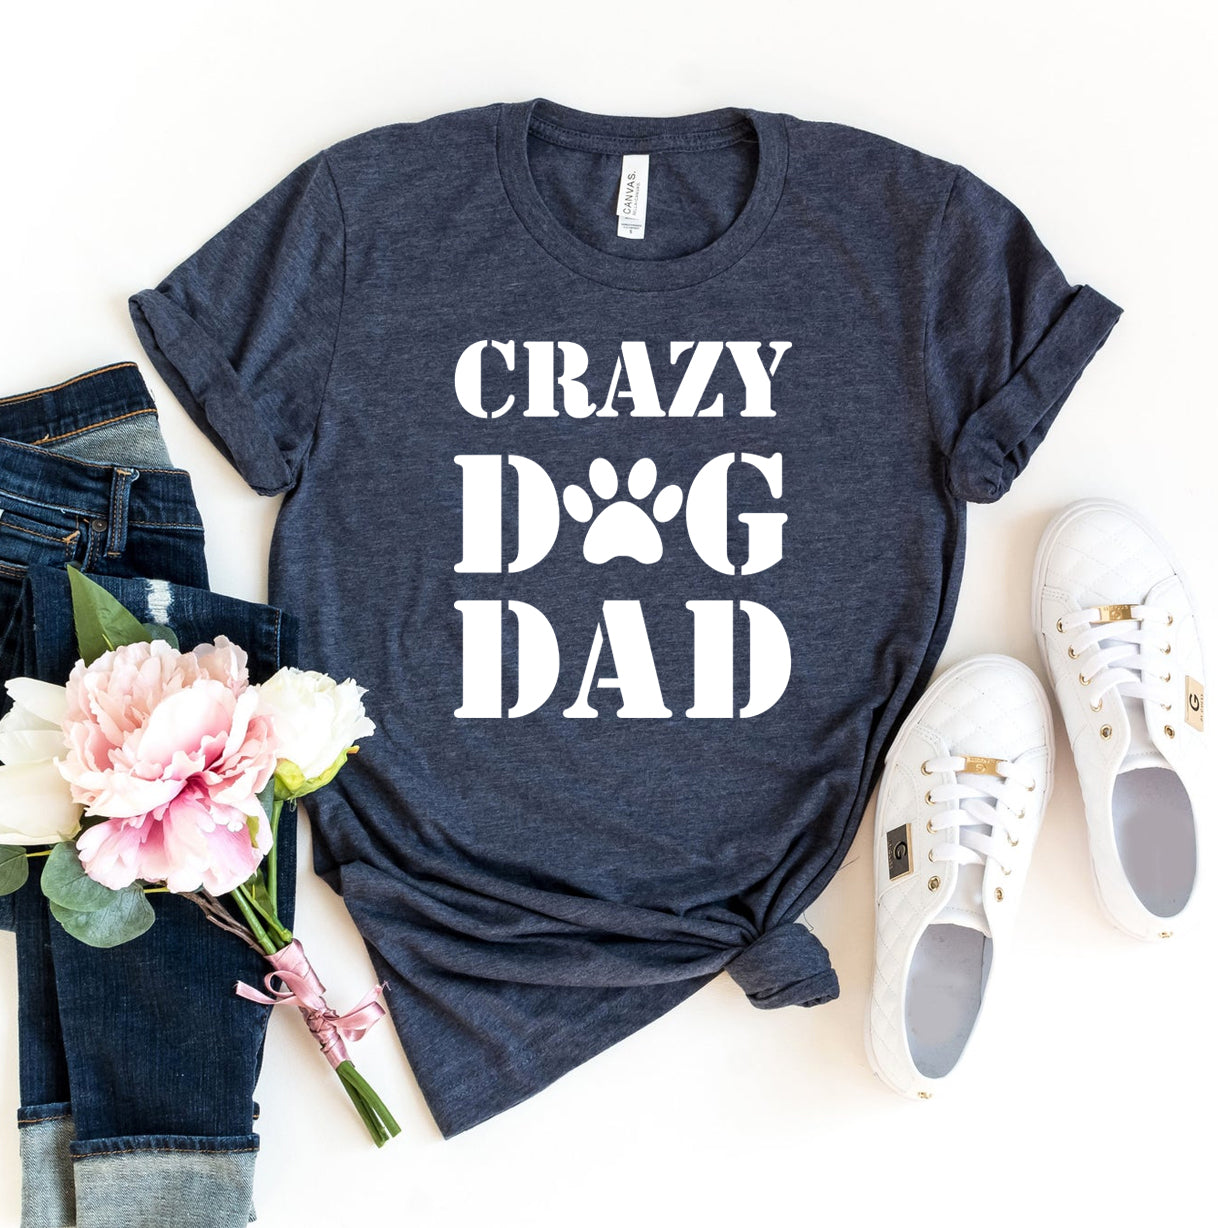 Crazy Dog Dad T-shirt